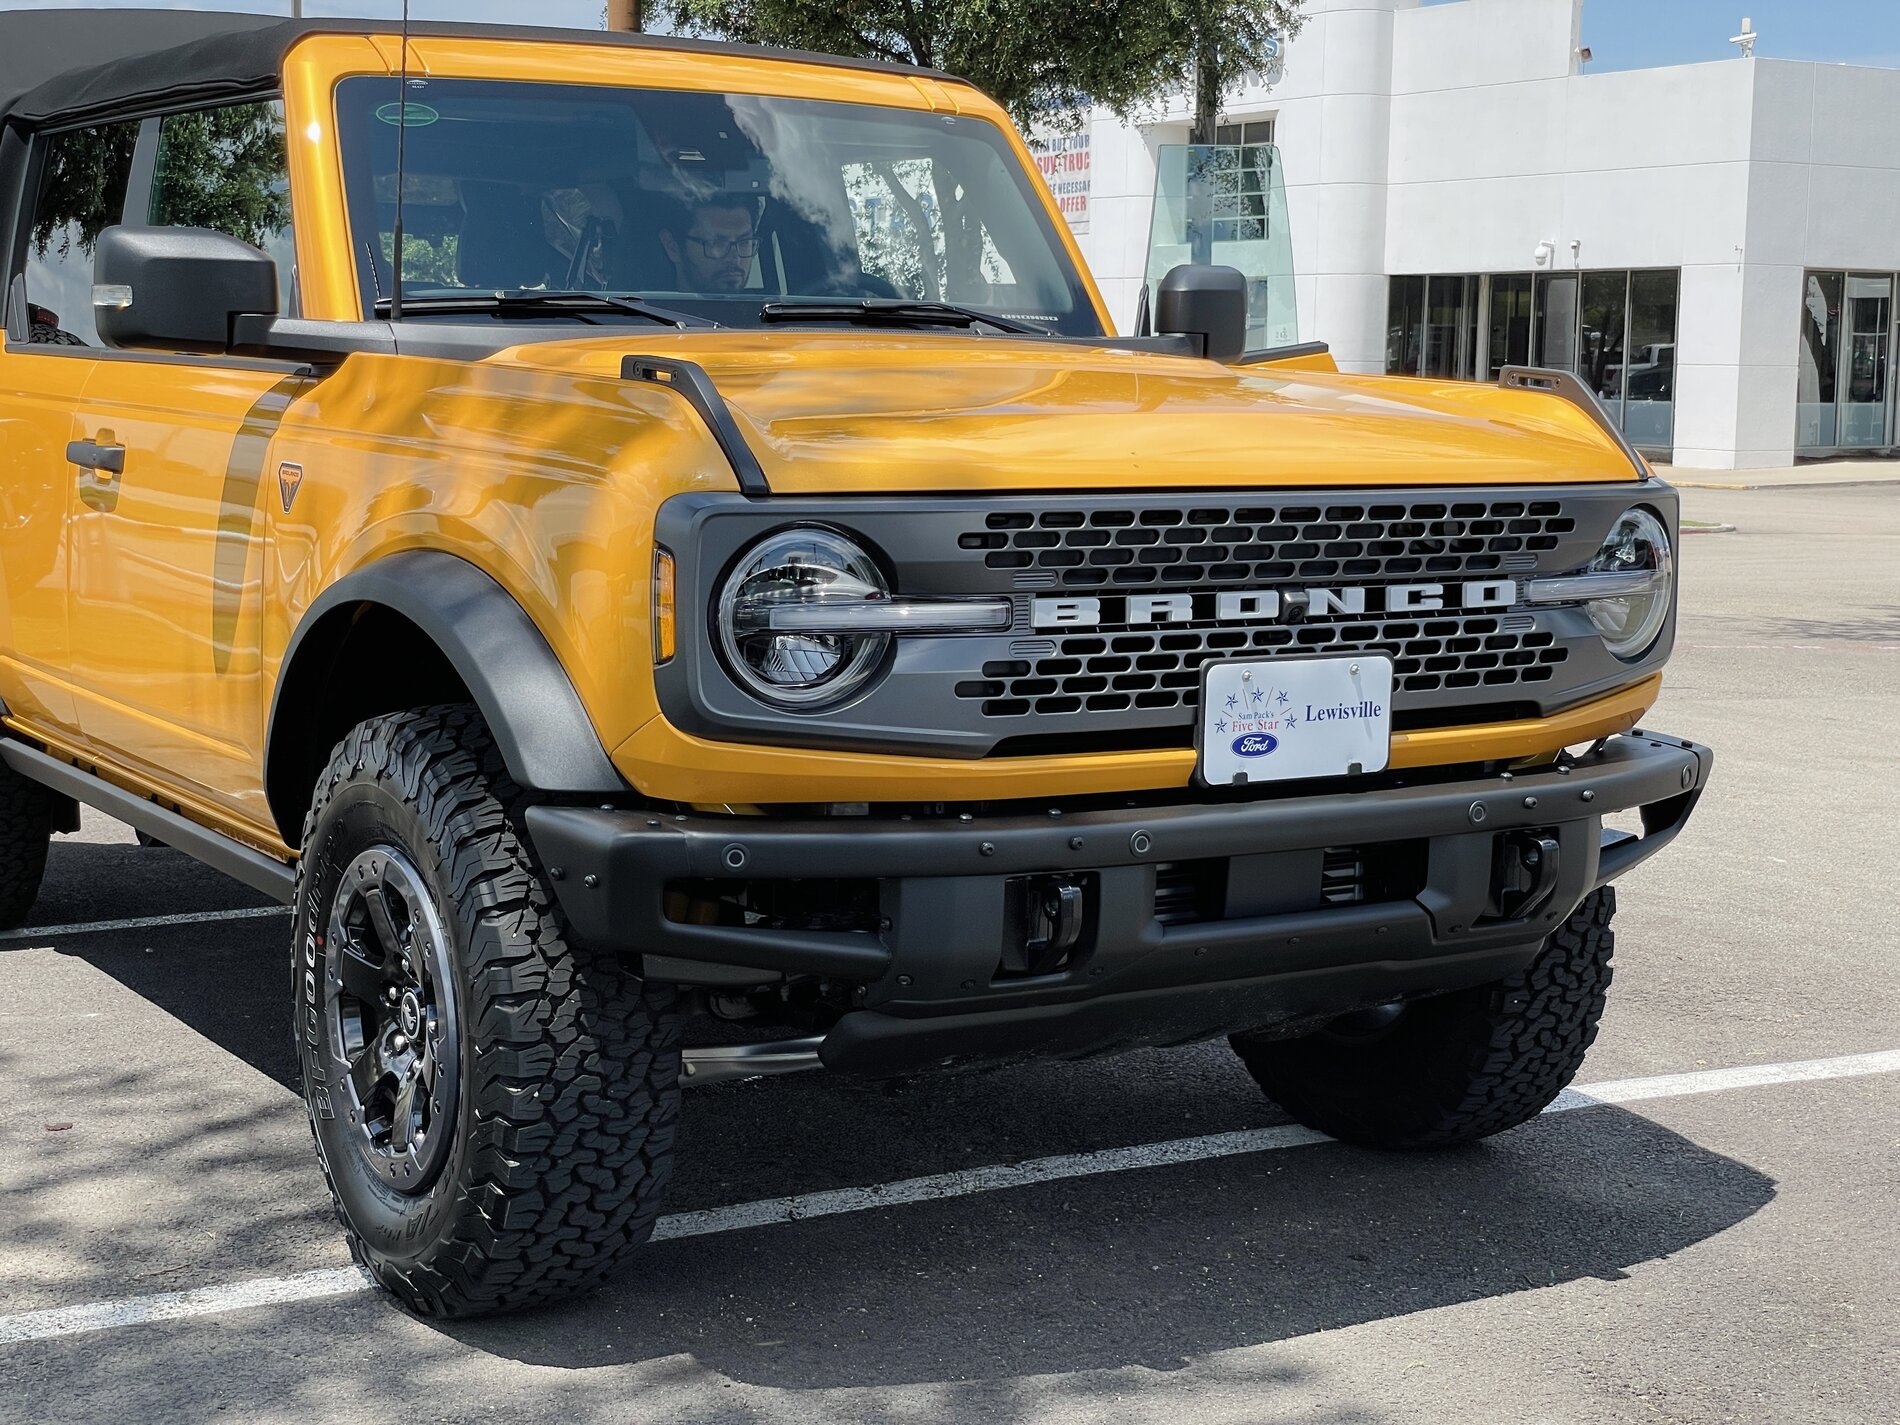 Ford Bronco Texas Dealer Demo's for Test Drives (Mannequin's) IMG_1173